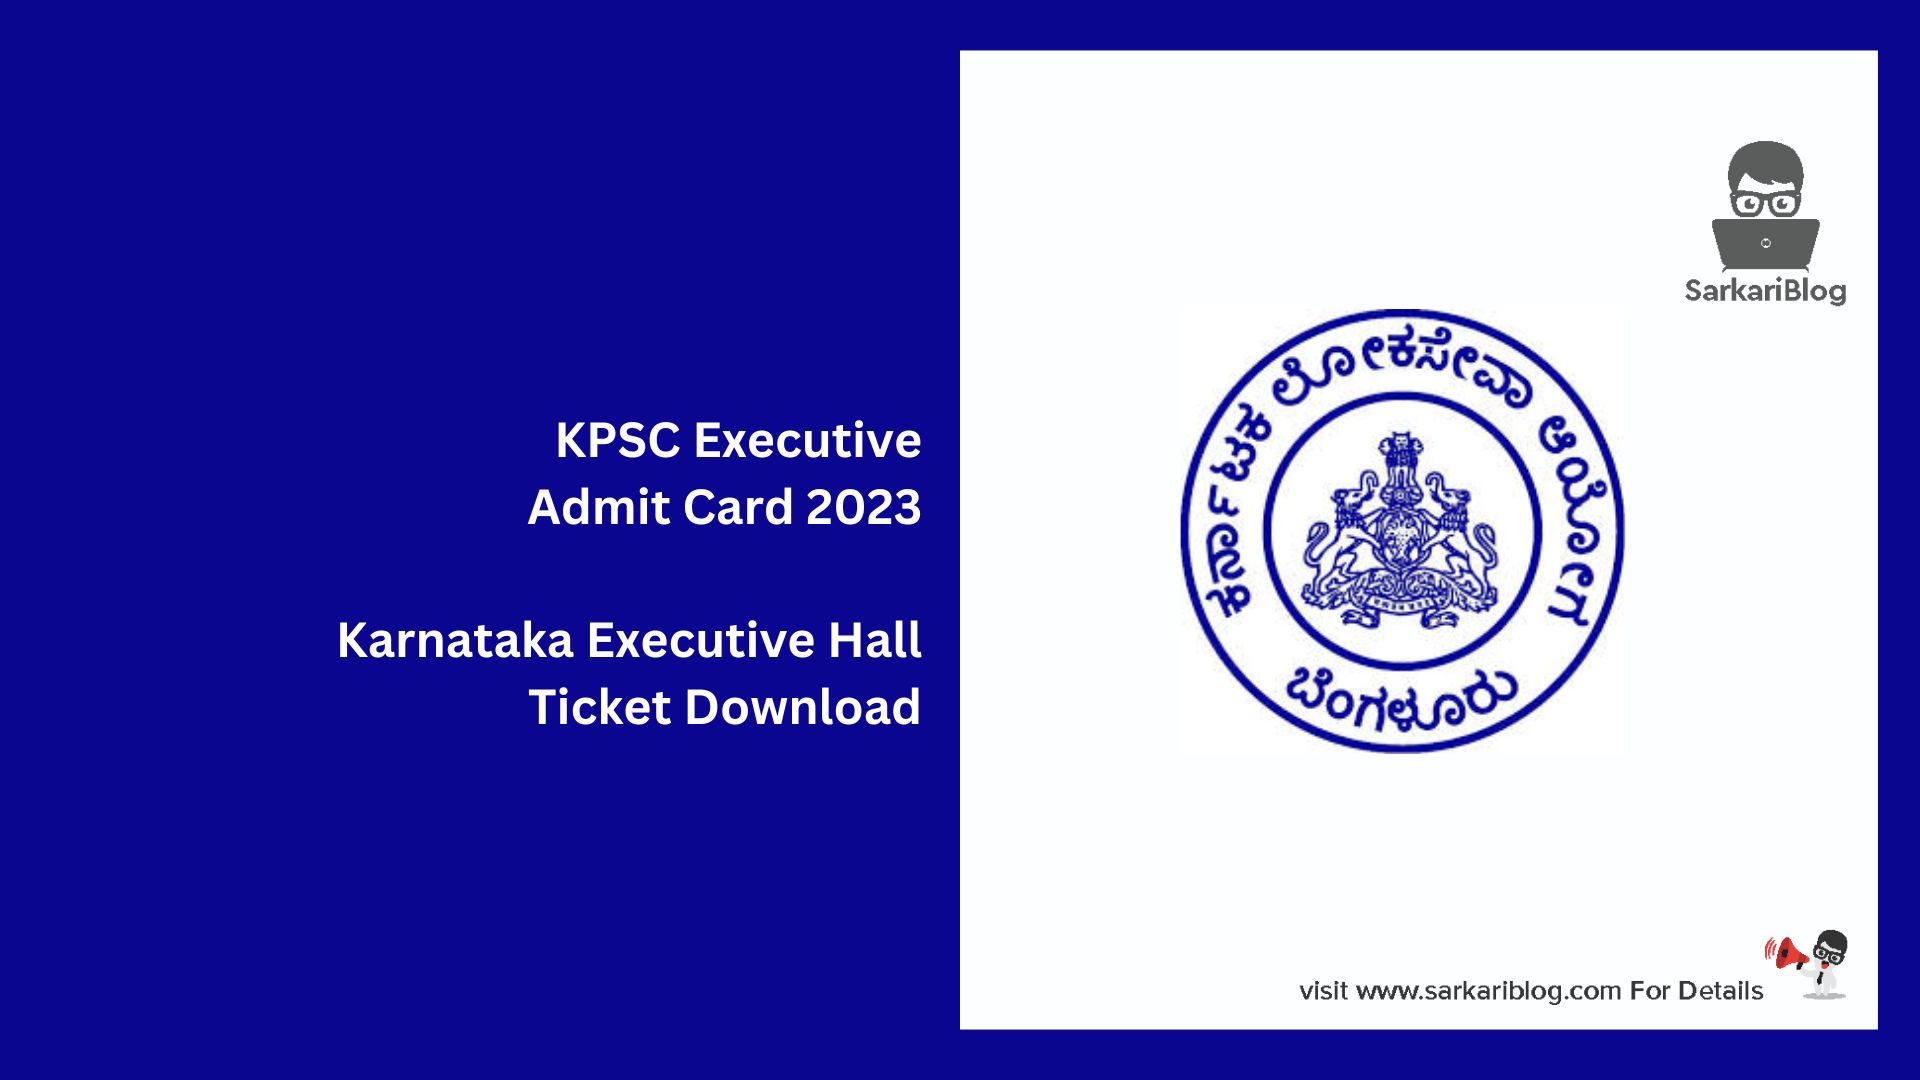 KPSC Executive Admit Card 2023